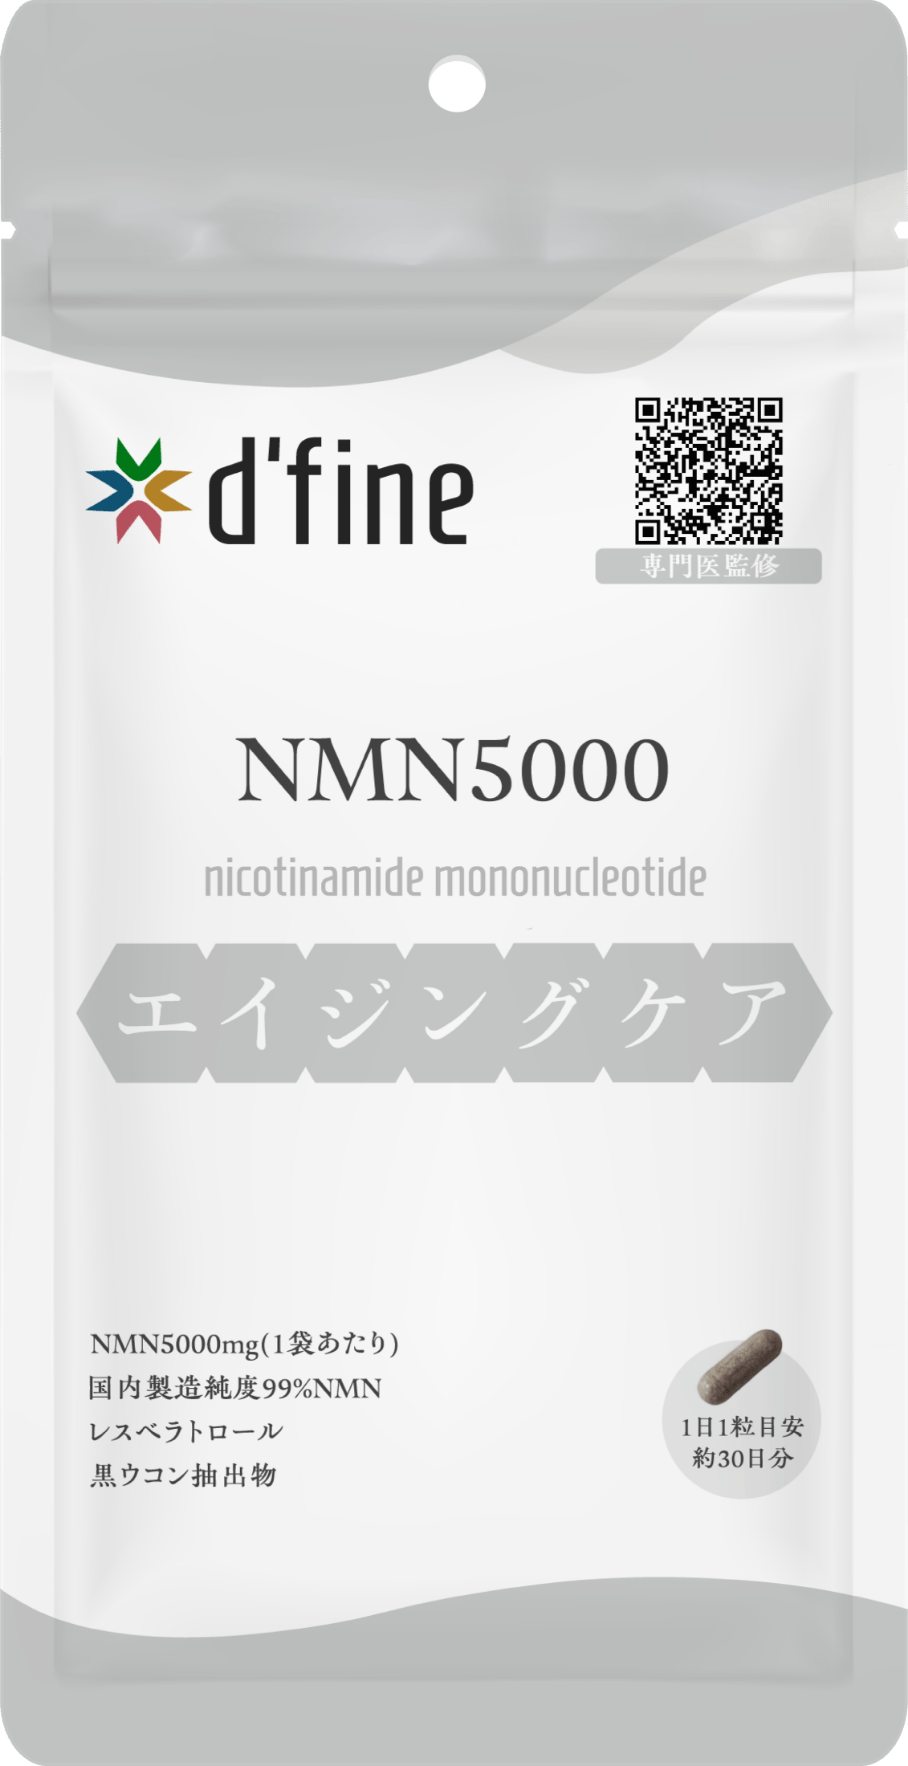 NMN5000 | d'fine